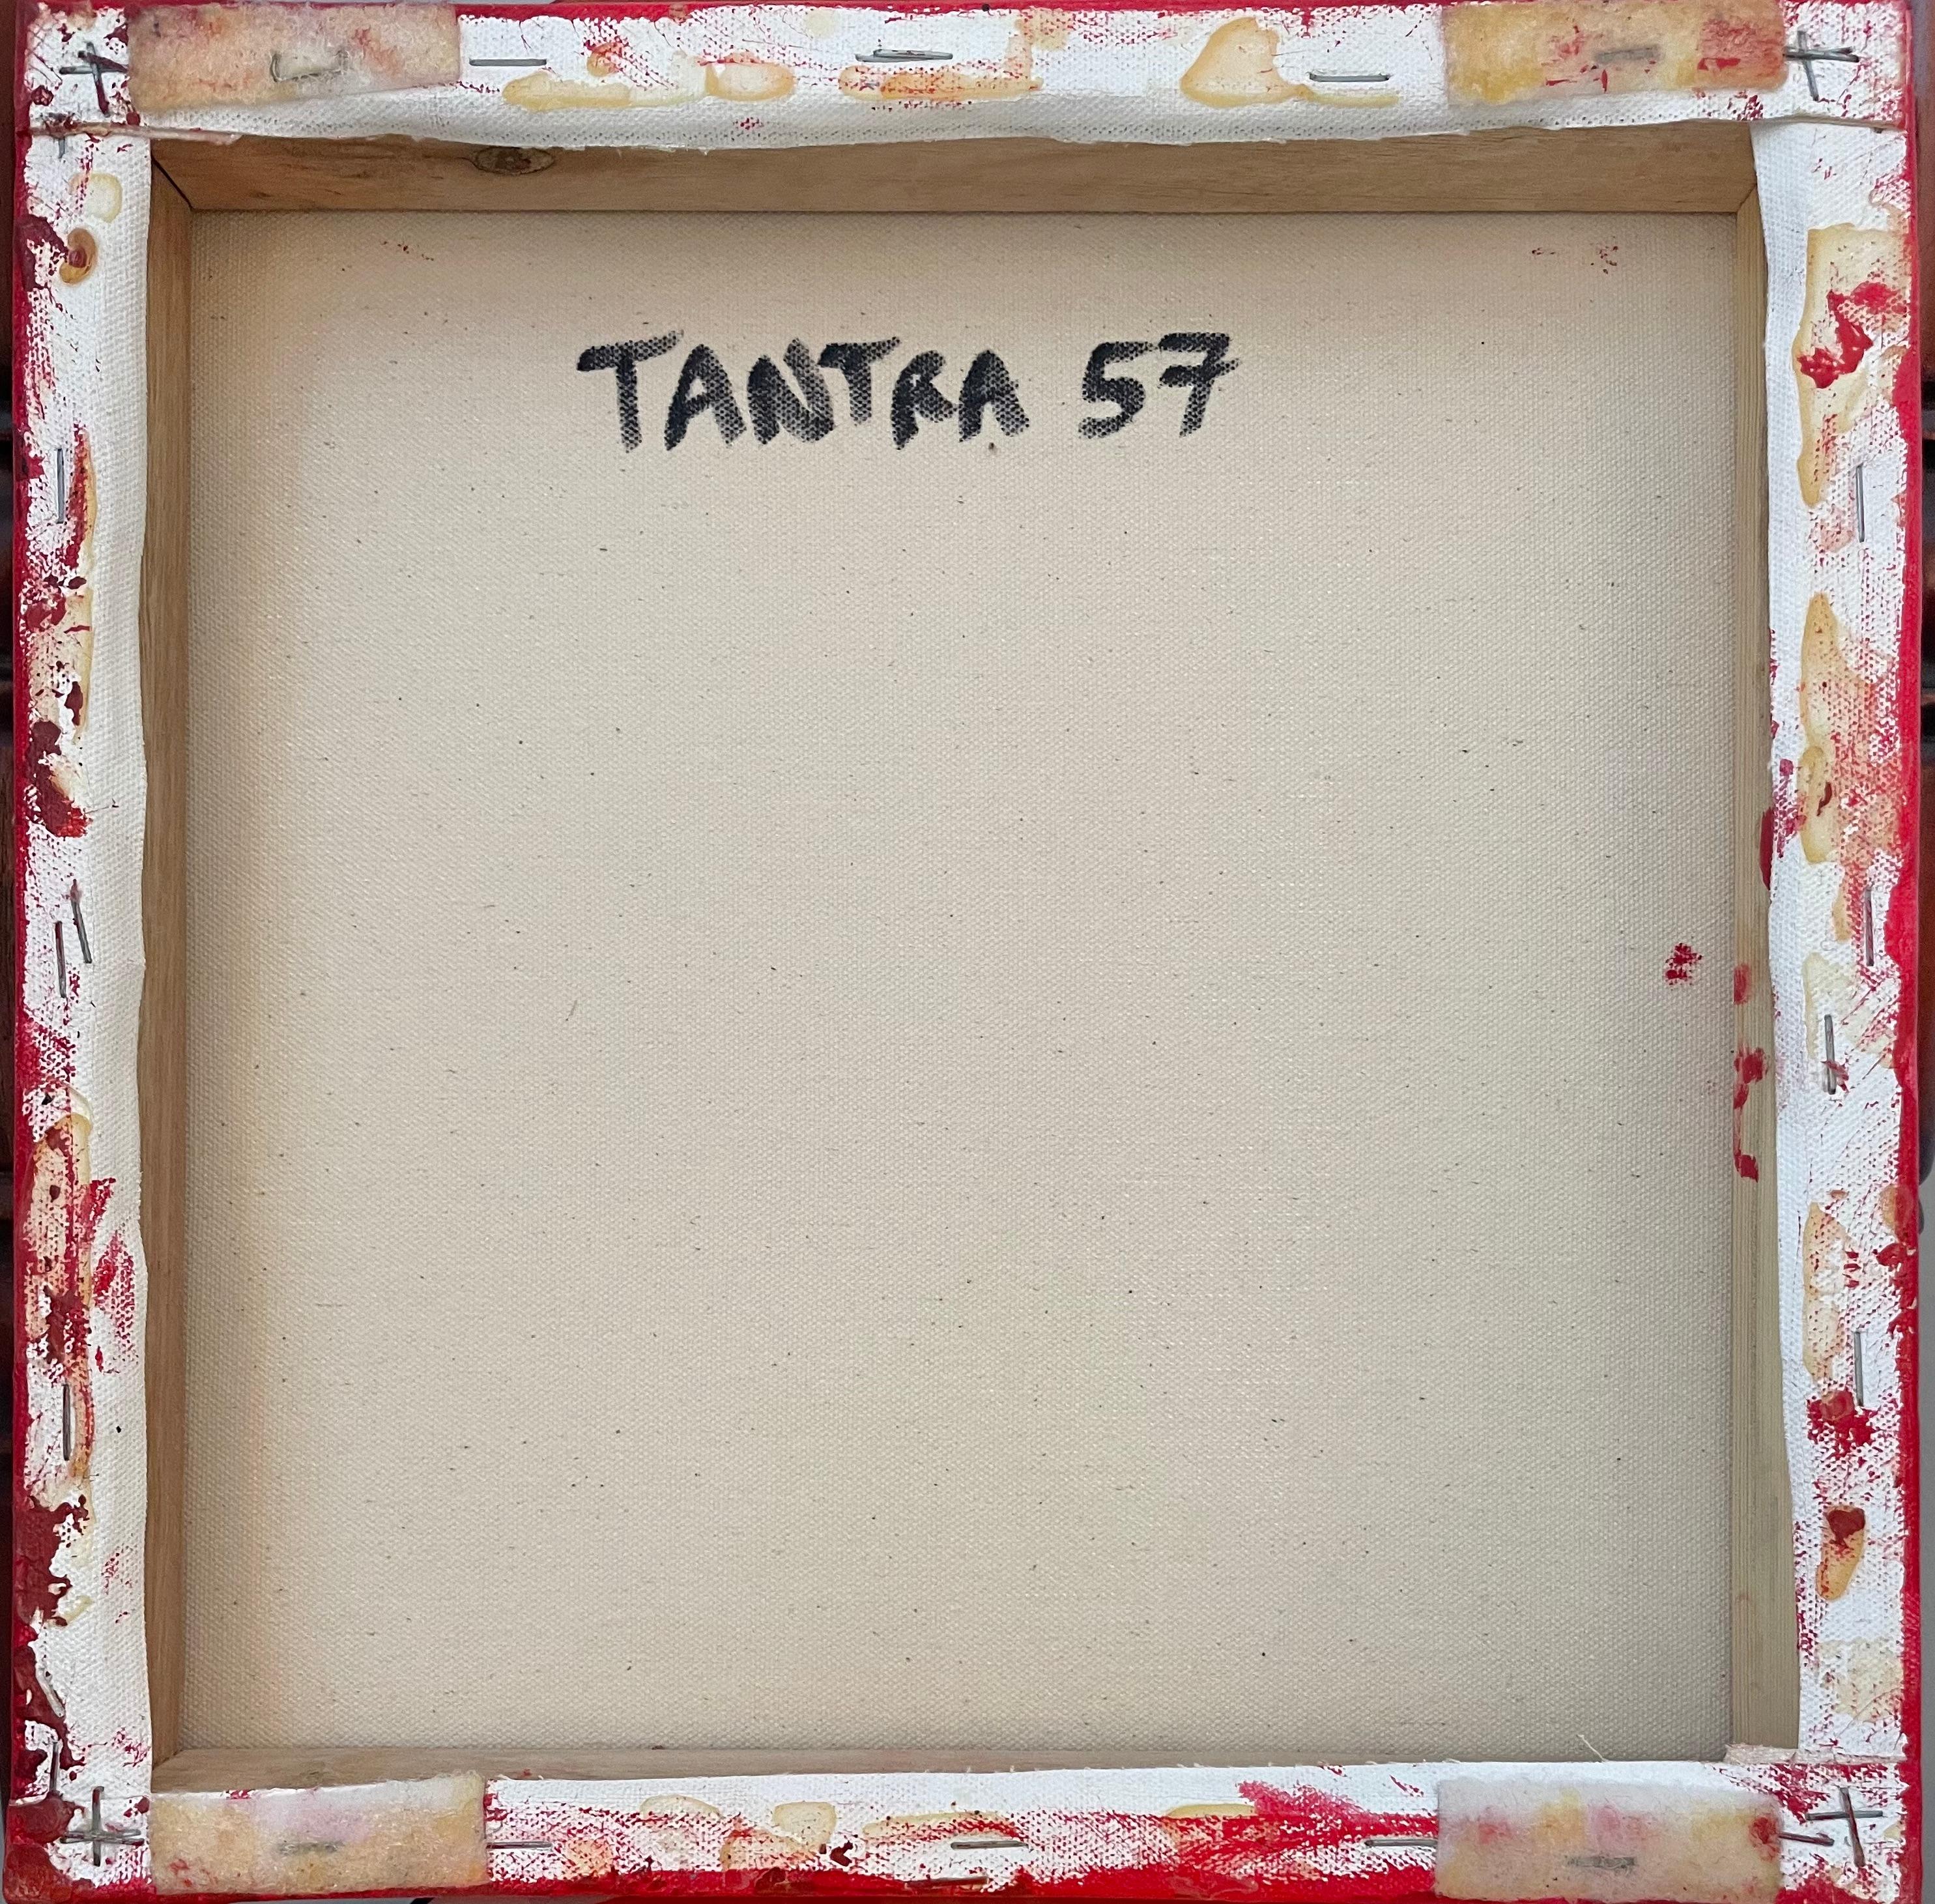 Tantra series: suite of 4 red minimalist mandala wall sculptures / paintings 1